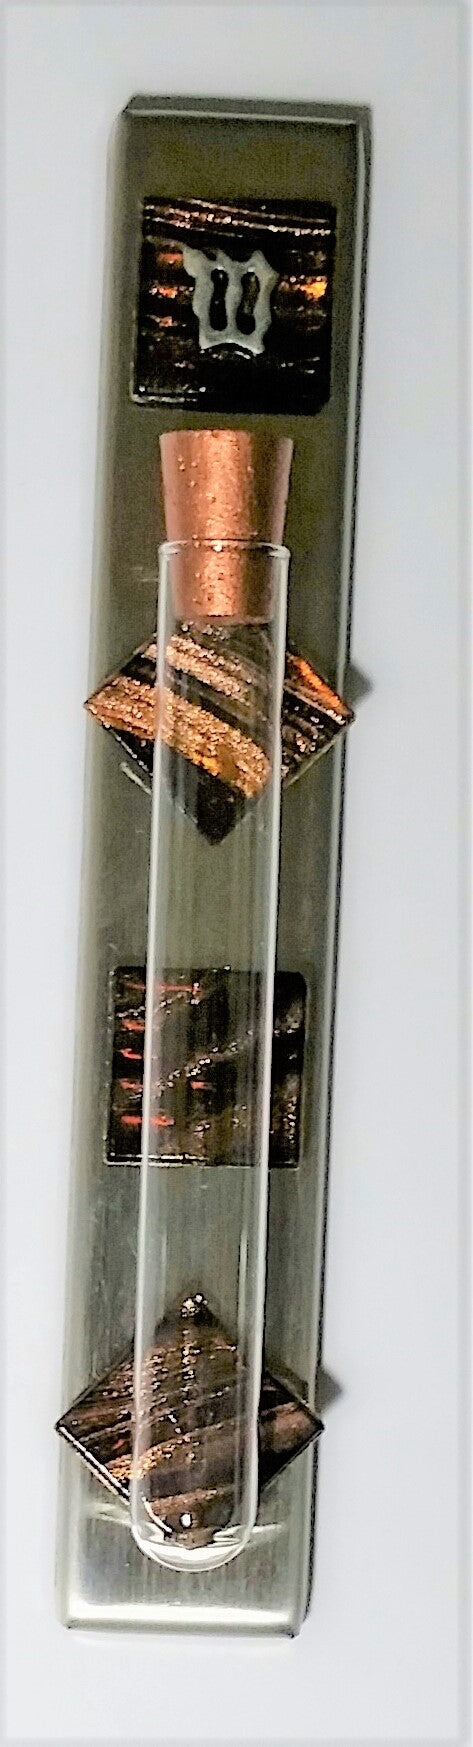 Stainless Steel Mezuzah Case - Brown Iridescent Glass Mezuzah Case - Kosher Mezuzah Scroll